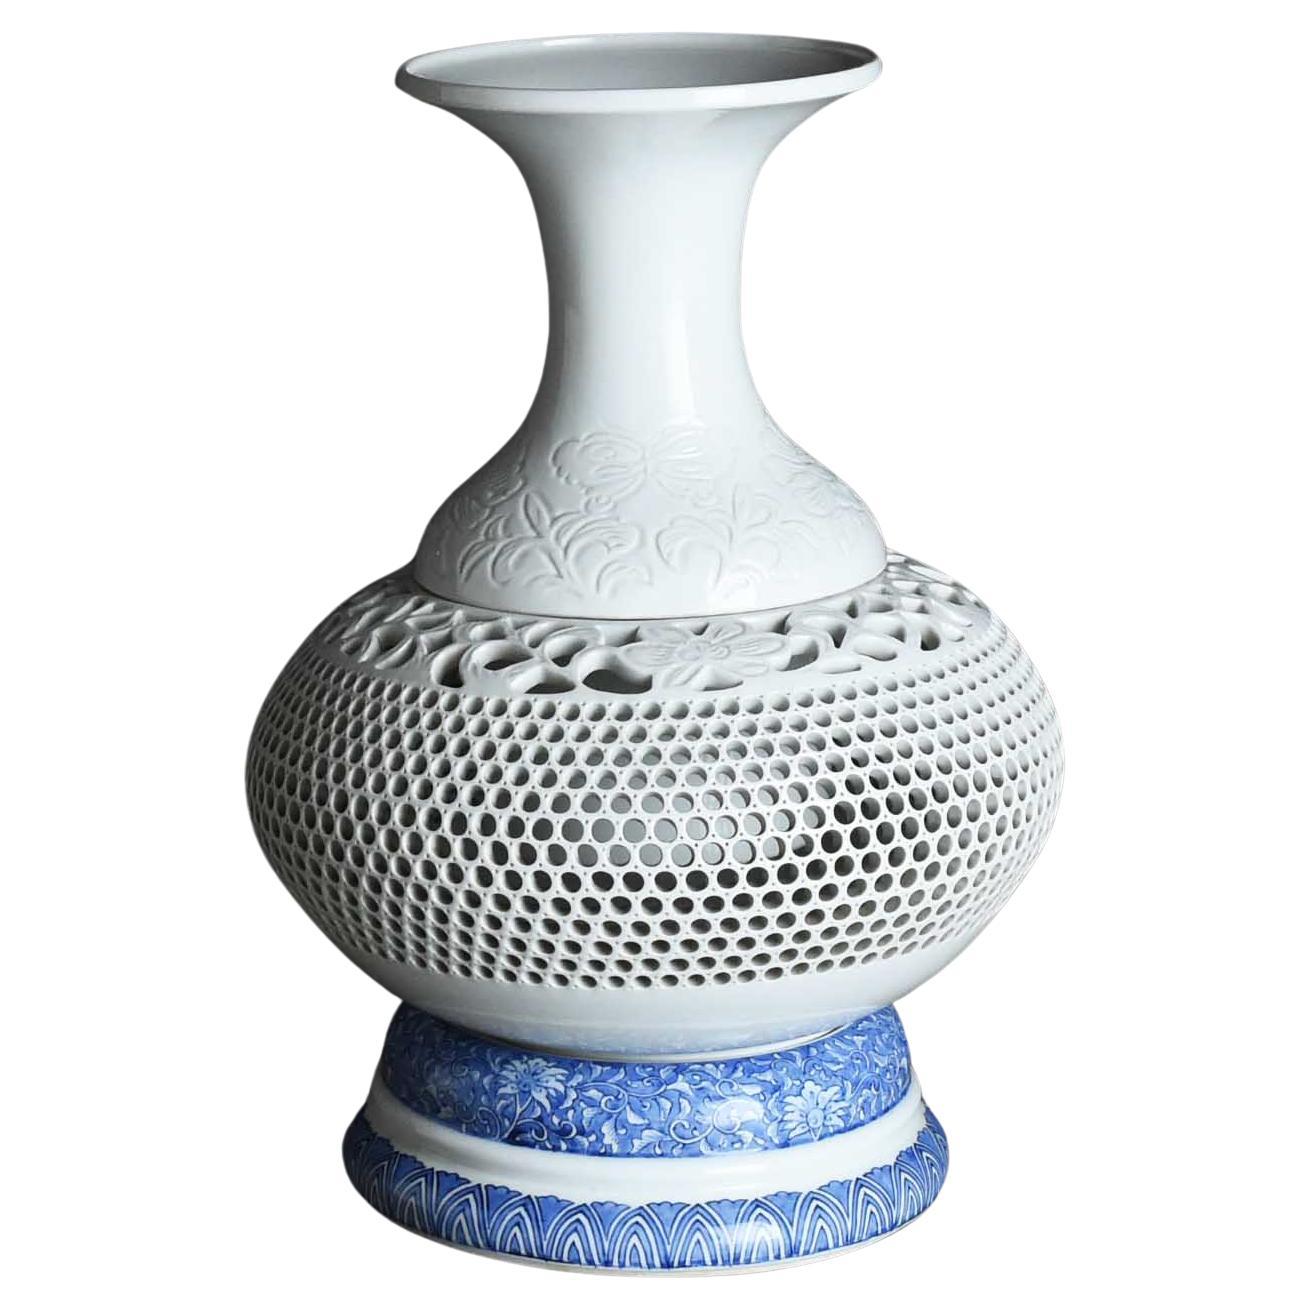 Japanese Arita/Imari "Hakuji Sukashi" botan vase